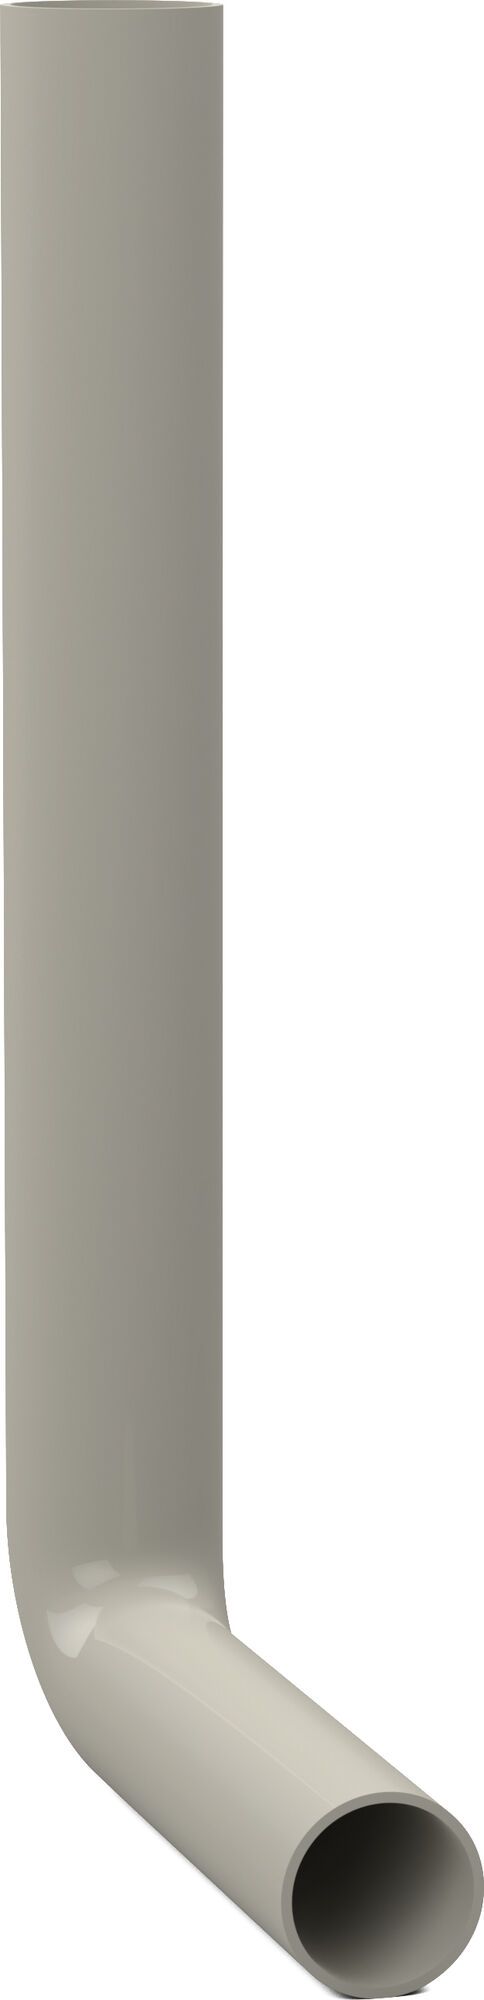 Koljeno 380 x 210 mm, pergamon